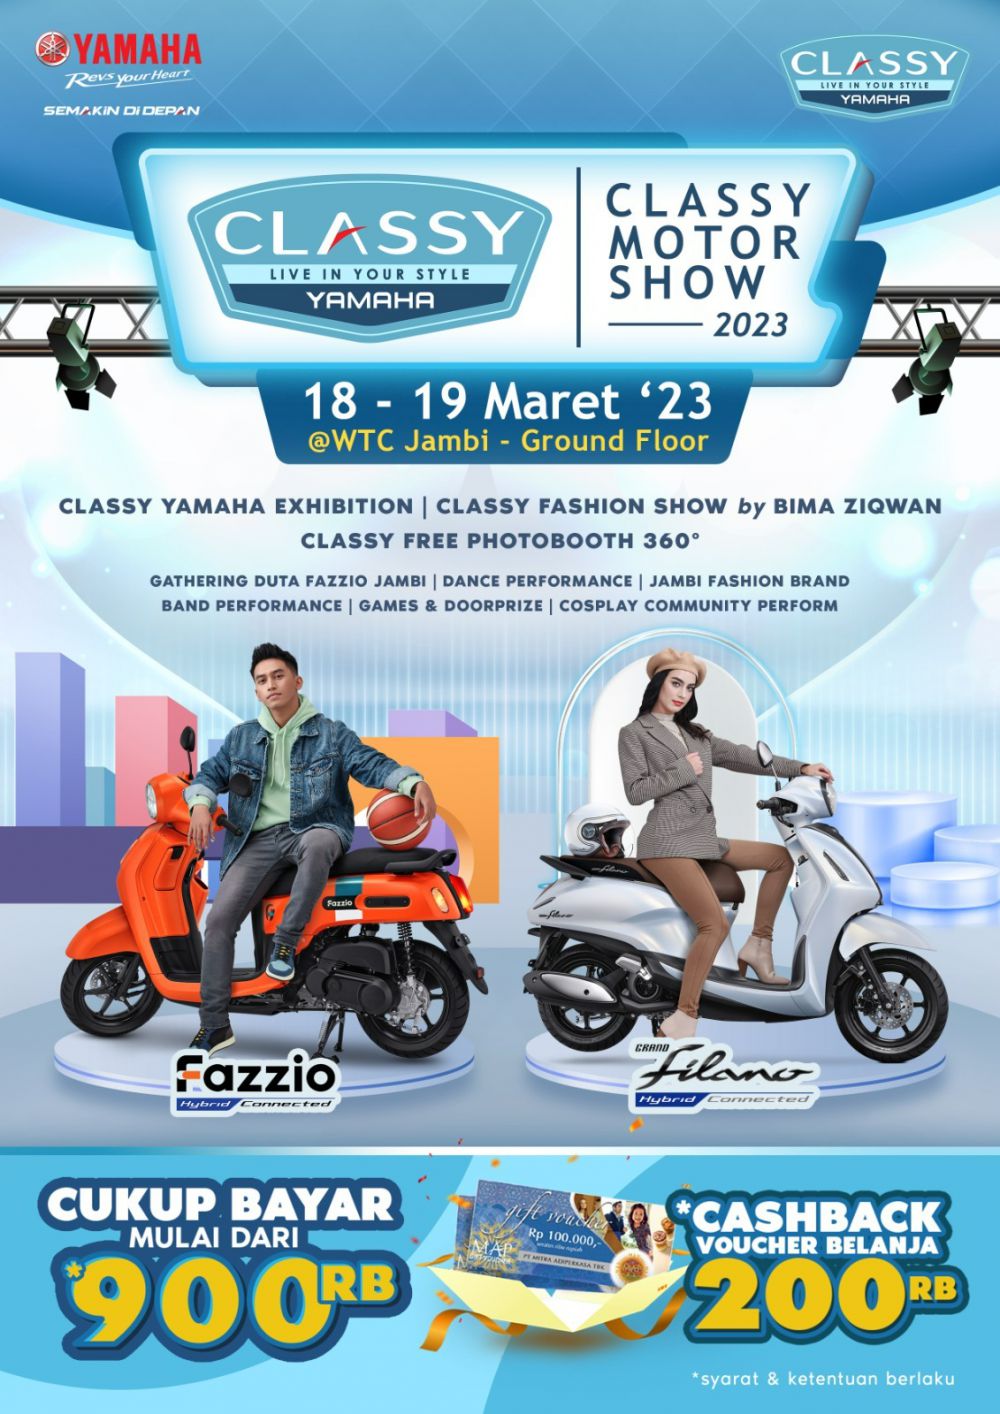 Yuk Warga Jambi Ramaikan Yamaha Classy Motor Show 2023 di Mall WTC Jambi Weekend Ini